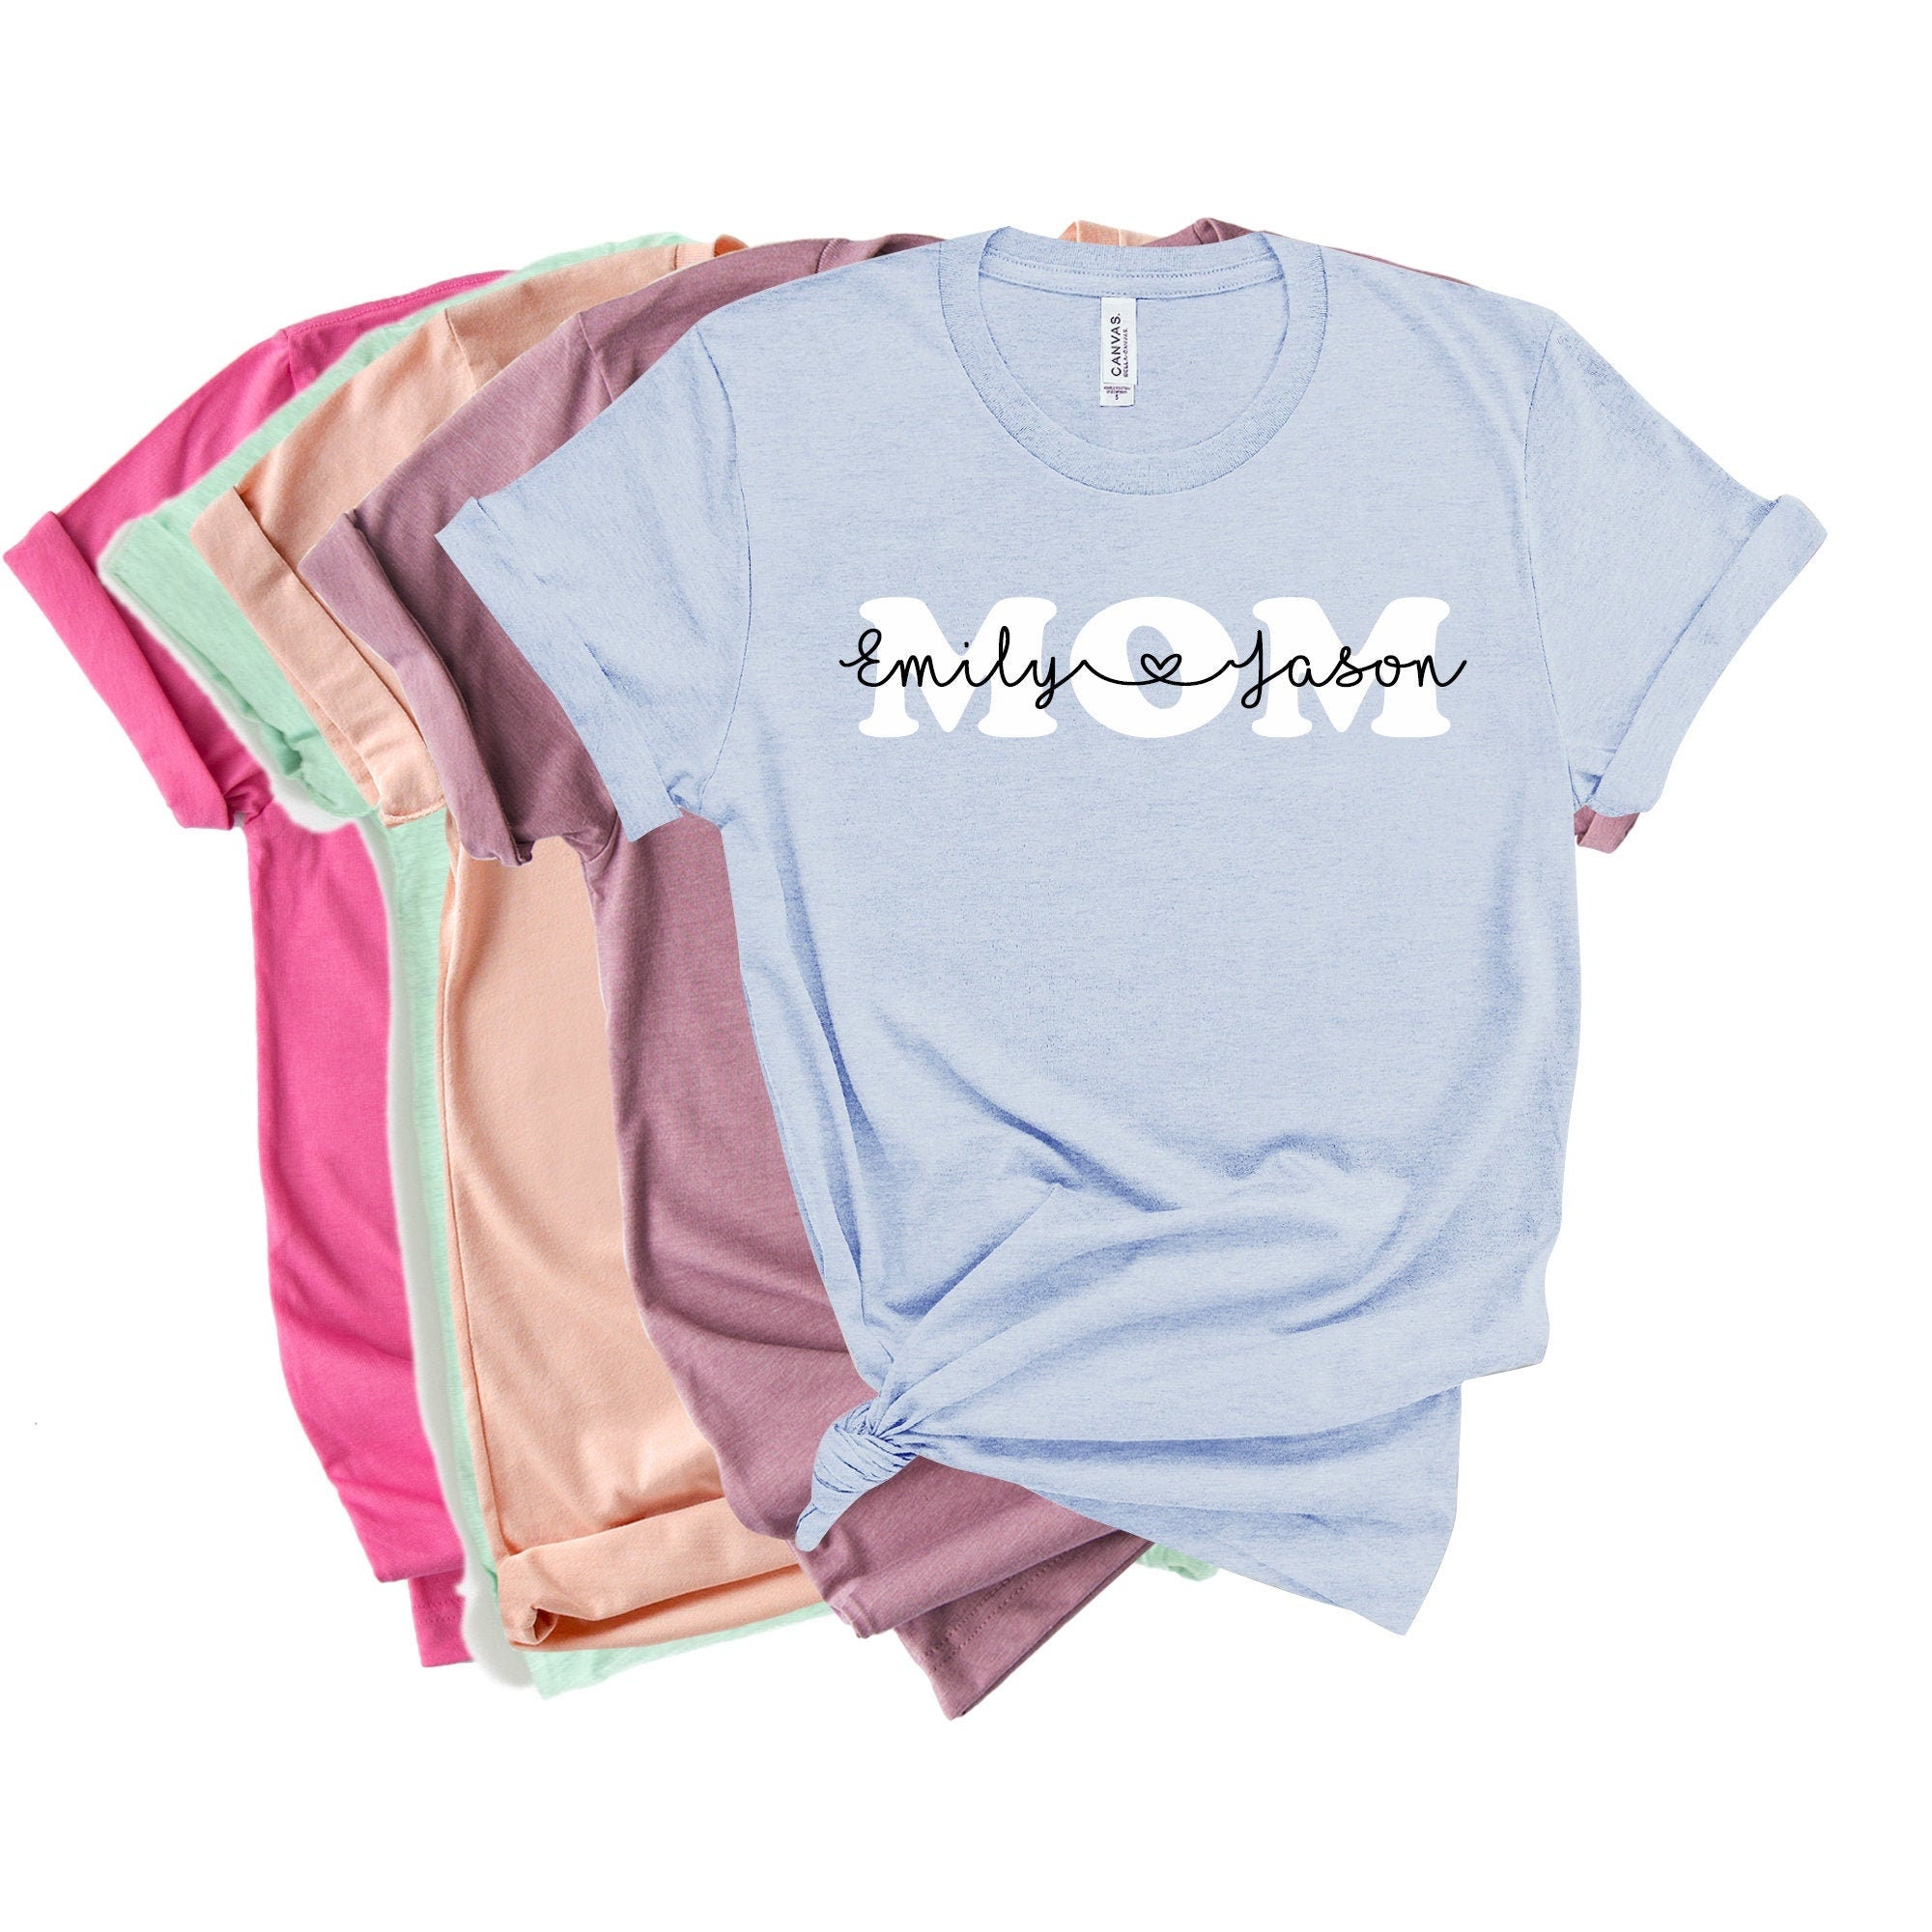 Mom Shirt, Mothers Day Gift, Mom-life Shirt, Shirts for Moms, Trendy Mom T-Shirts, Cool Mom Shirts, Shirts for Moms